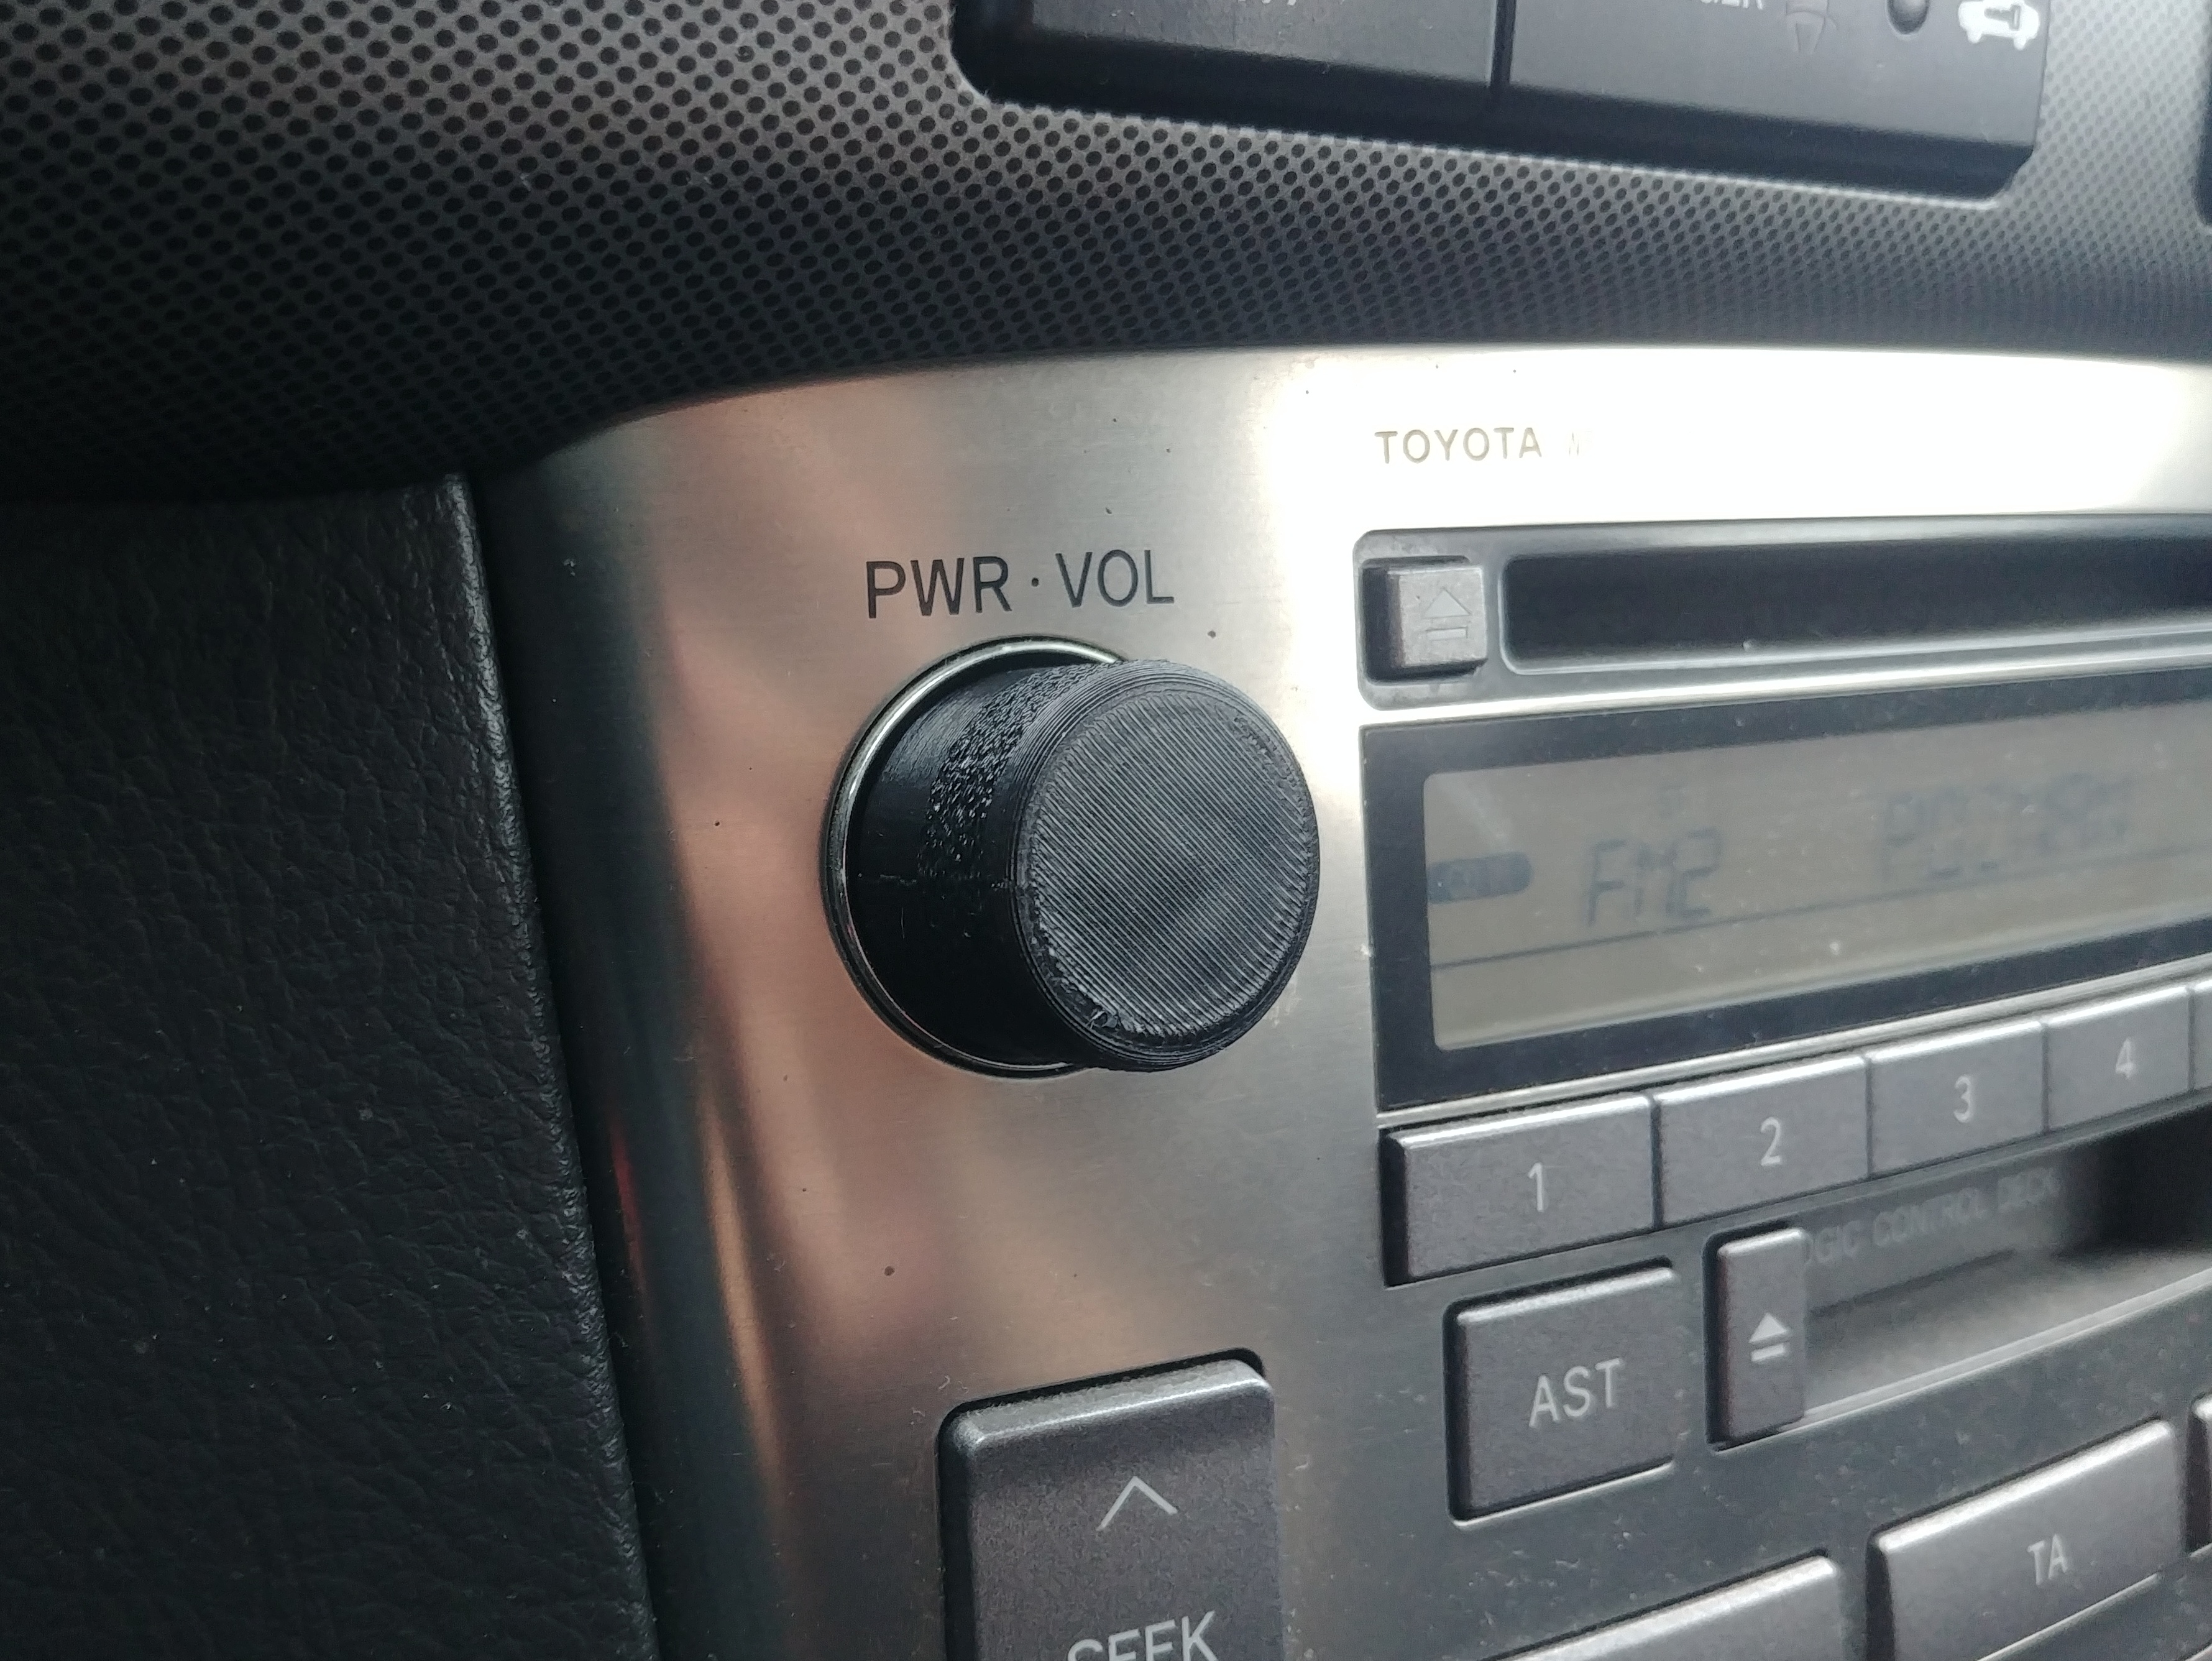 Radio replacement knob for Toyota Lexus